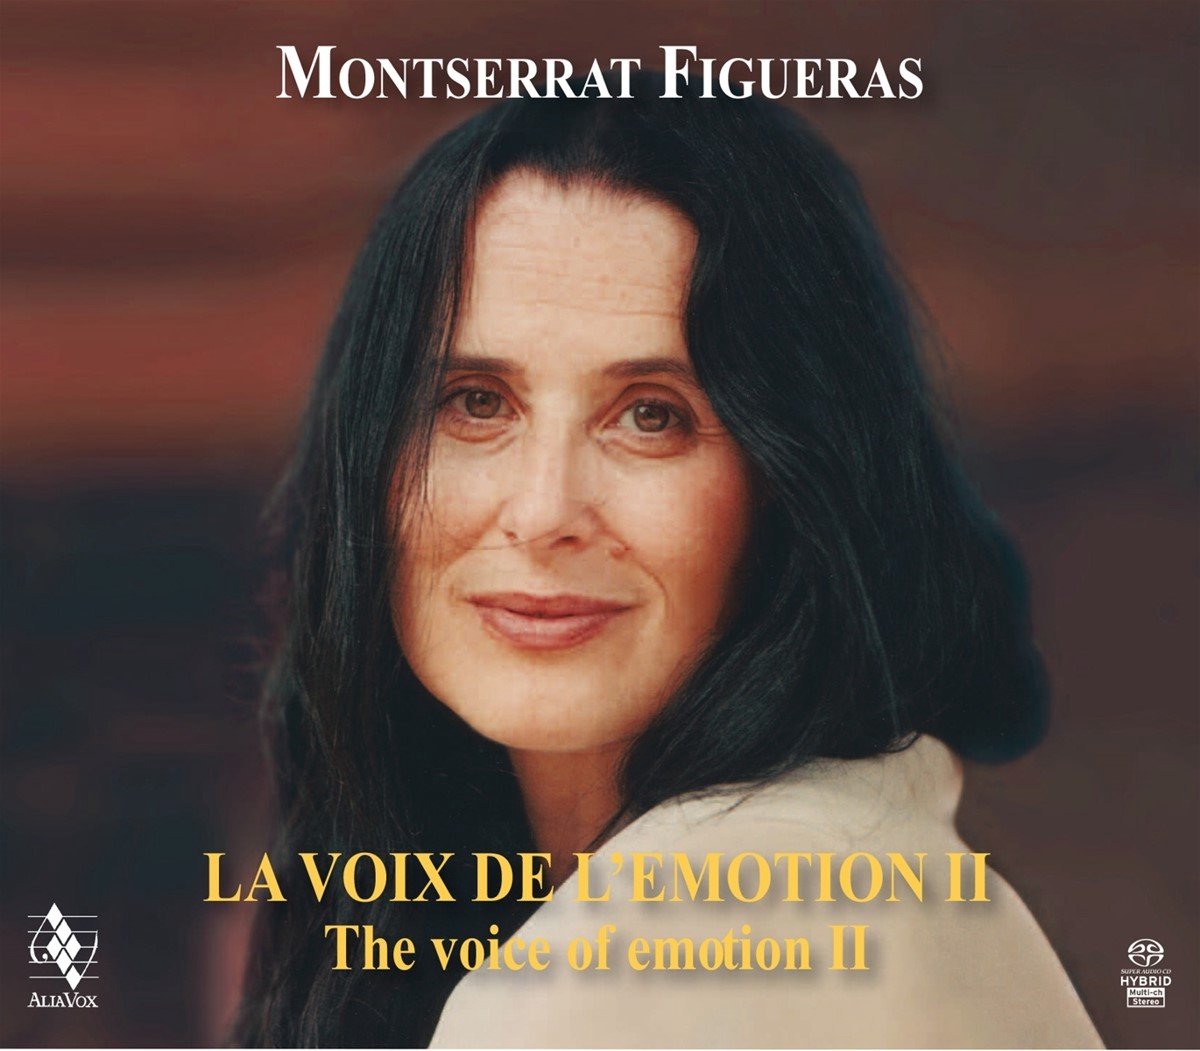 Jordi Savall & Montserrat Figueras - The Voice Of Emotion II (2 CD) - Jordi Savall & Montserrat Figueras